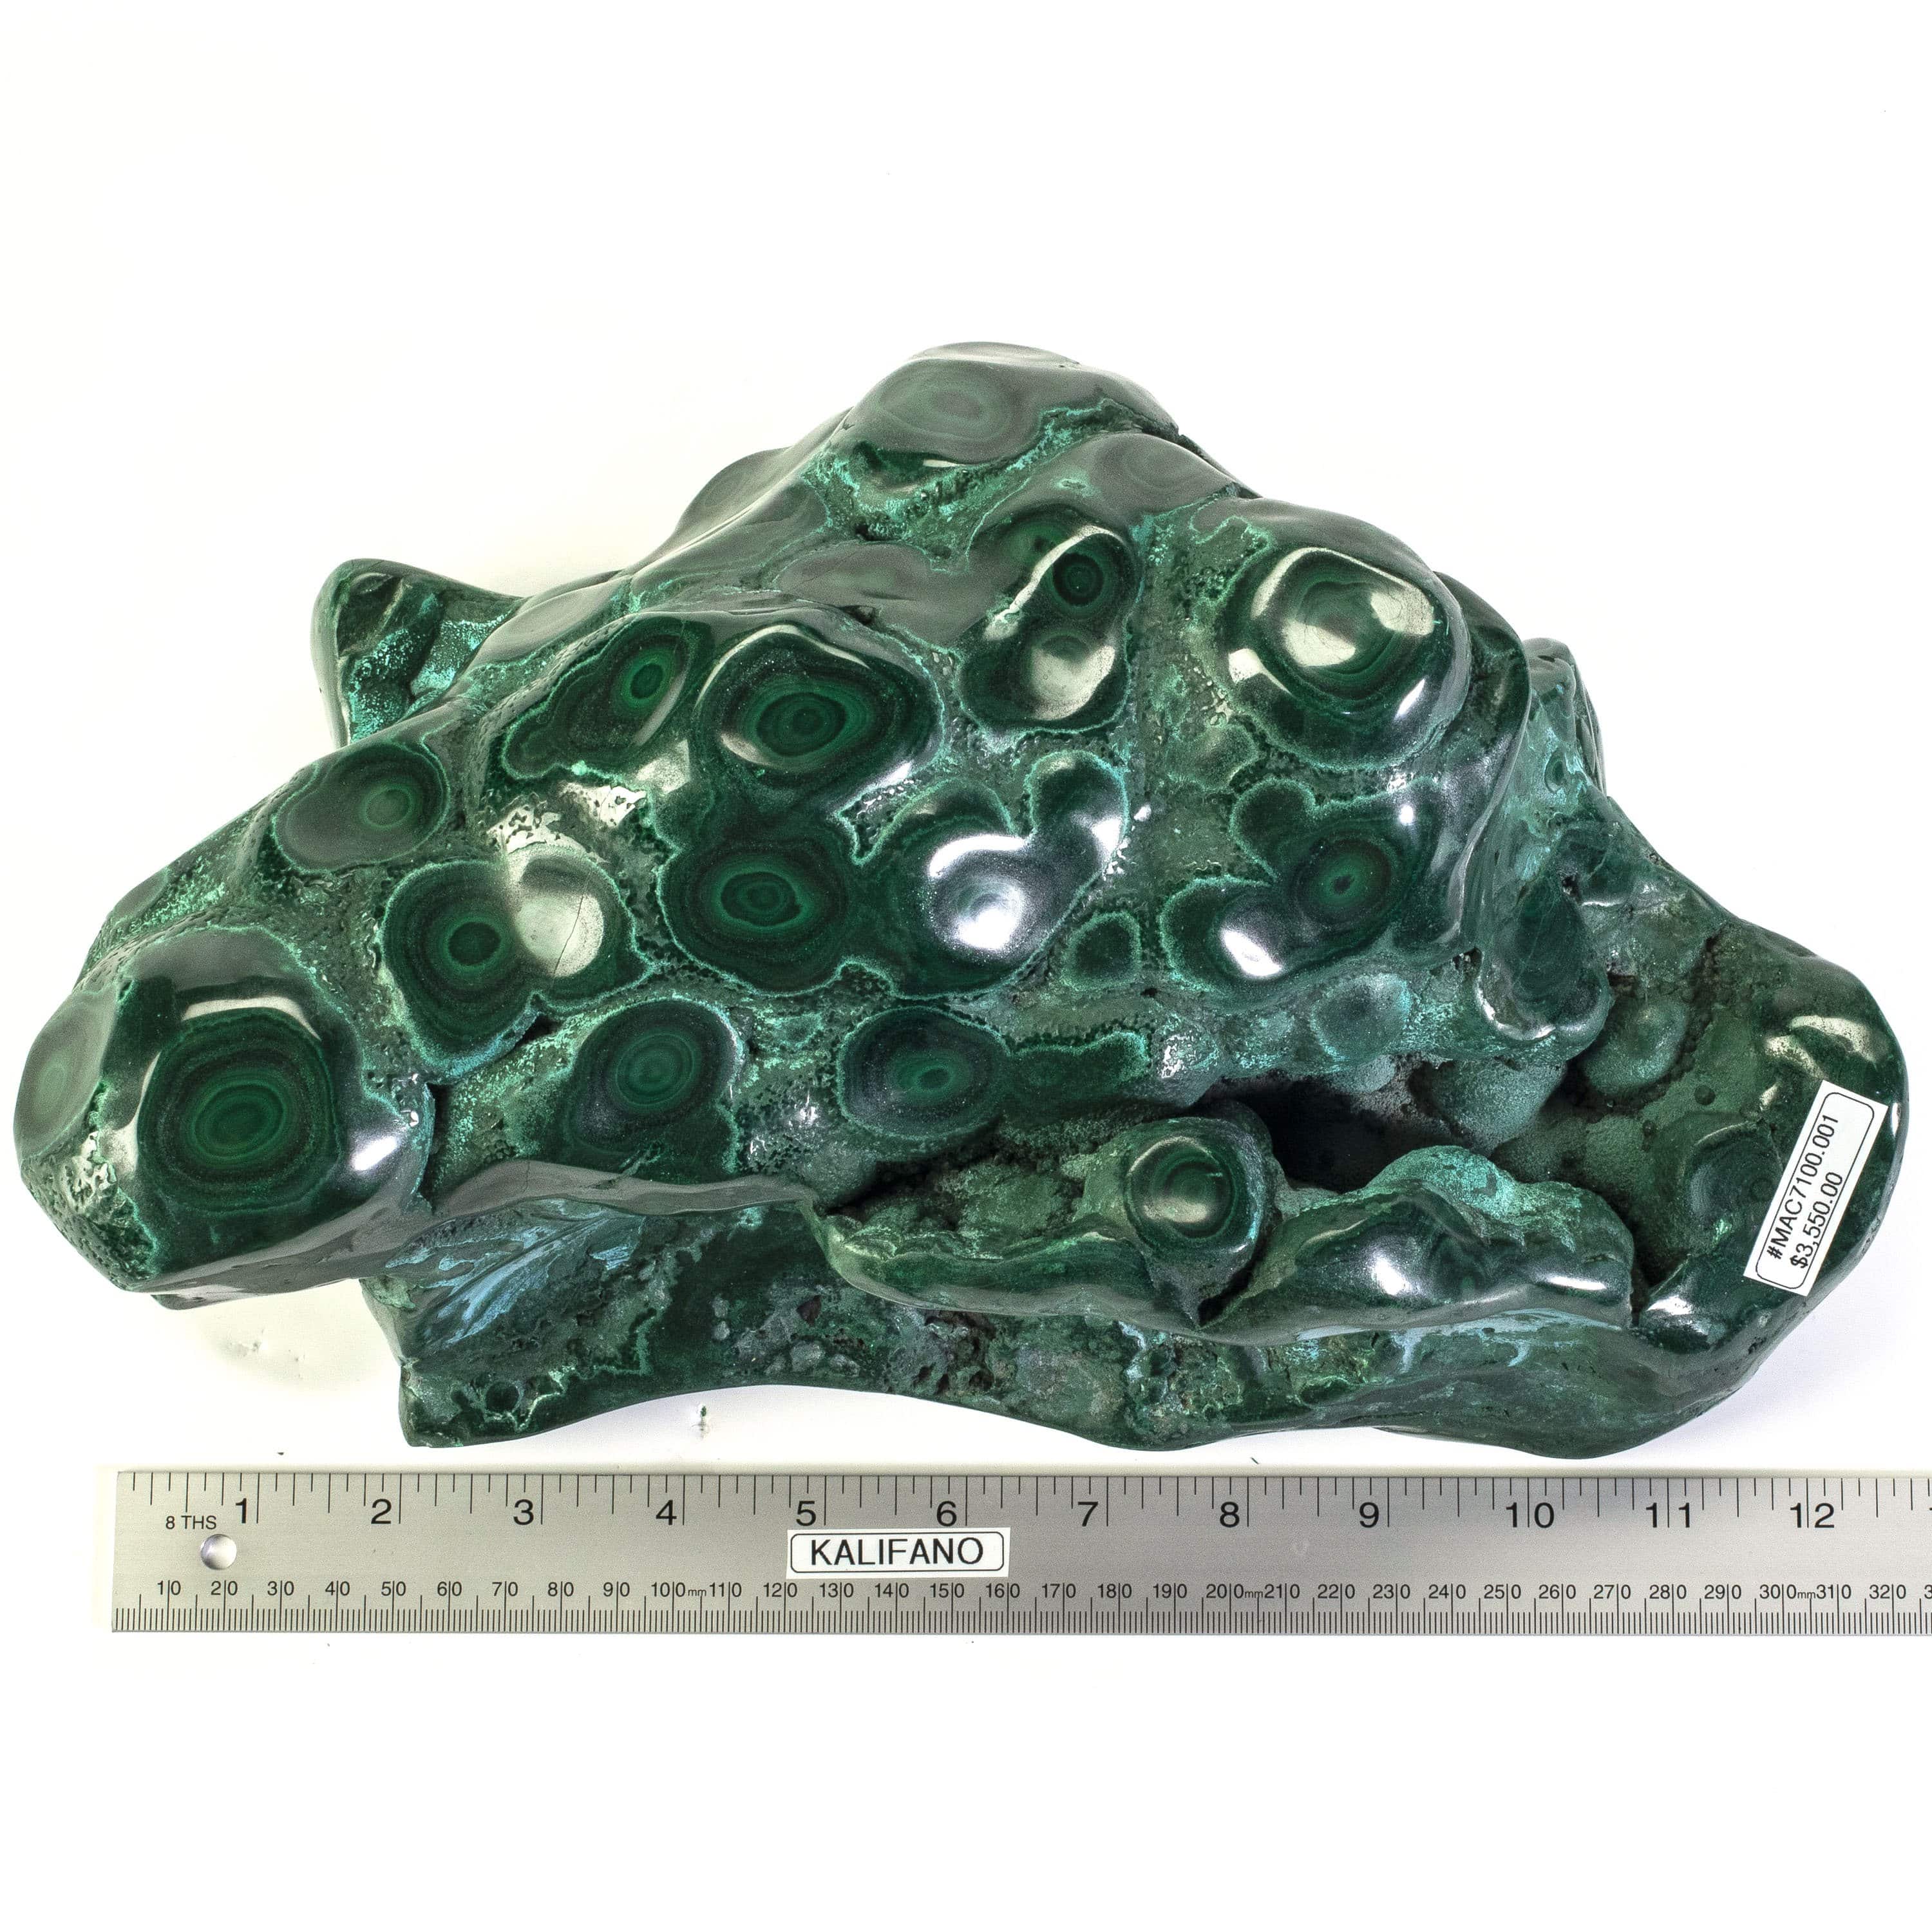 Kalifano Malachite Rare Natural Green Malachite with Blue Chrysocolla Freeform Specimen from Congo - 7.9 kg / 17.4 lbs MAC7100.001